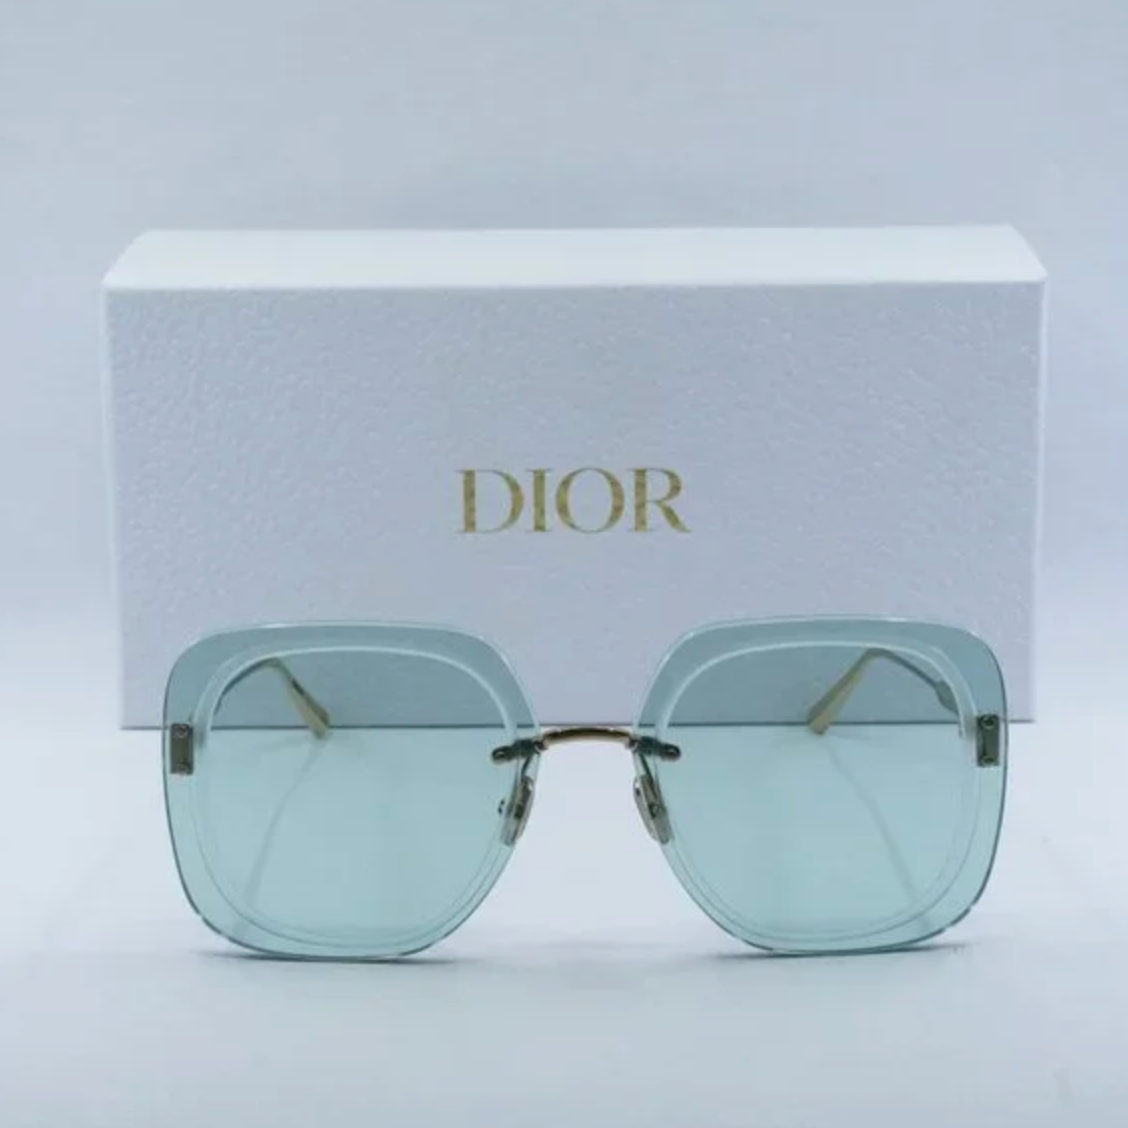 Christian Dior ULTRADIOR-SU-B0O0-65  New Sunglasses